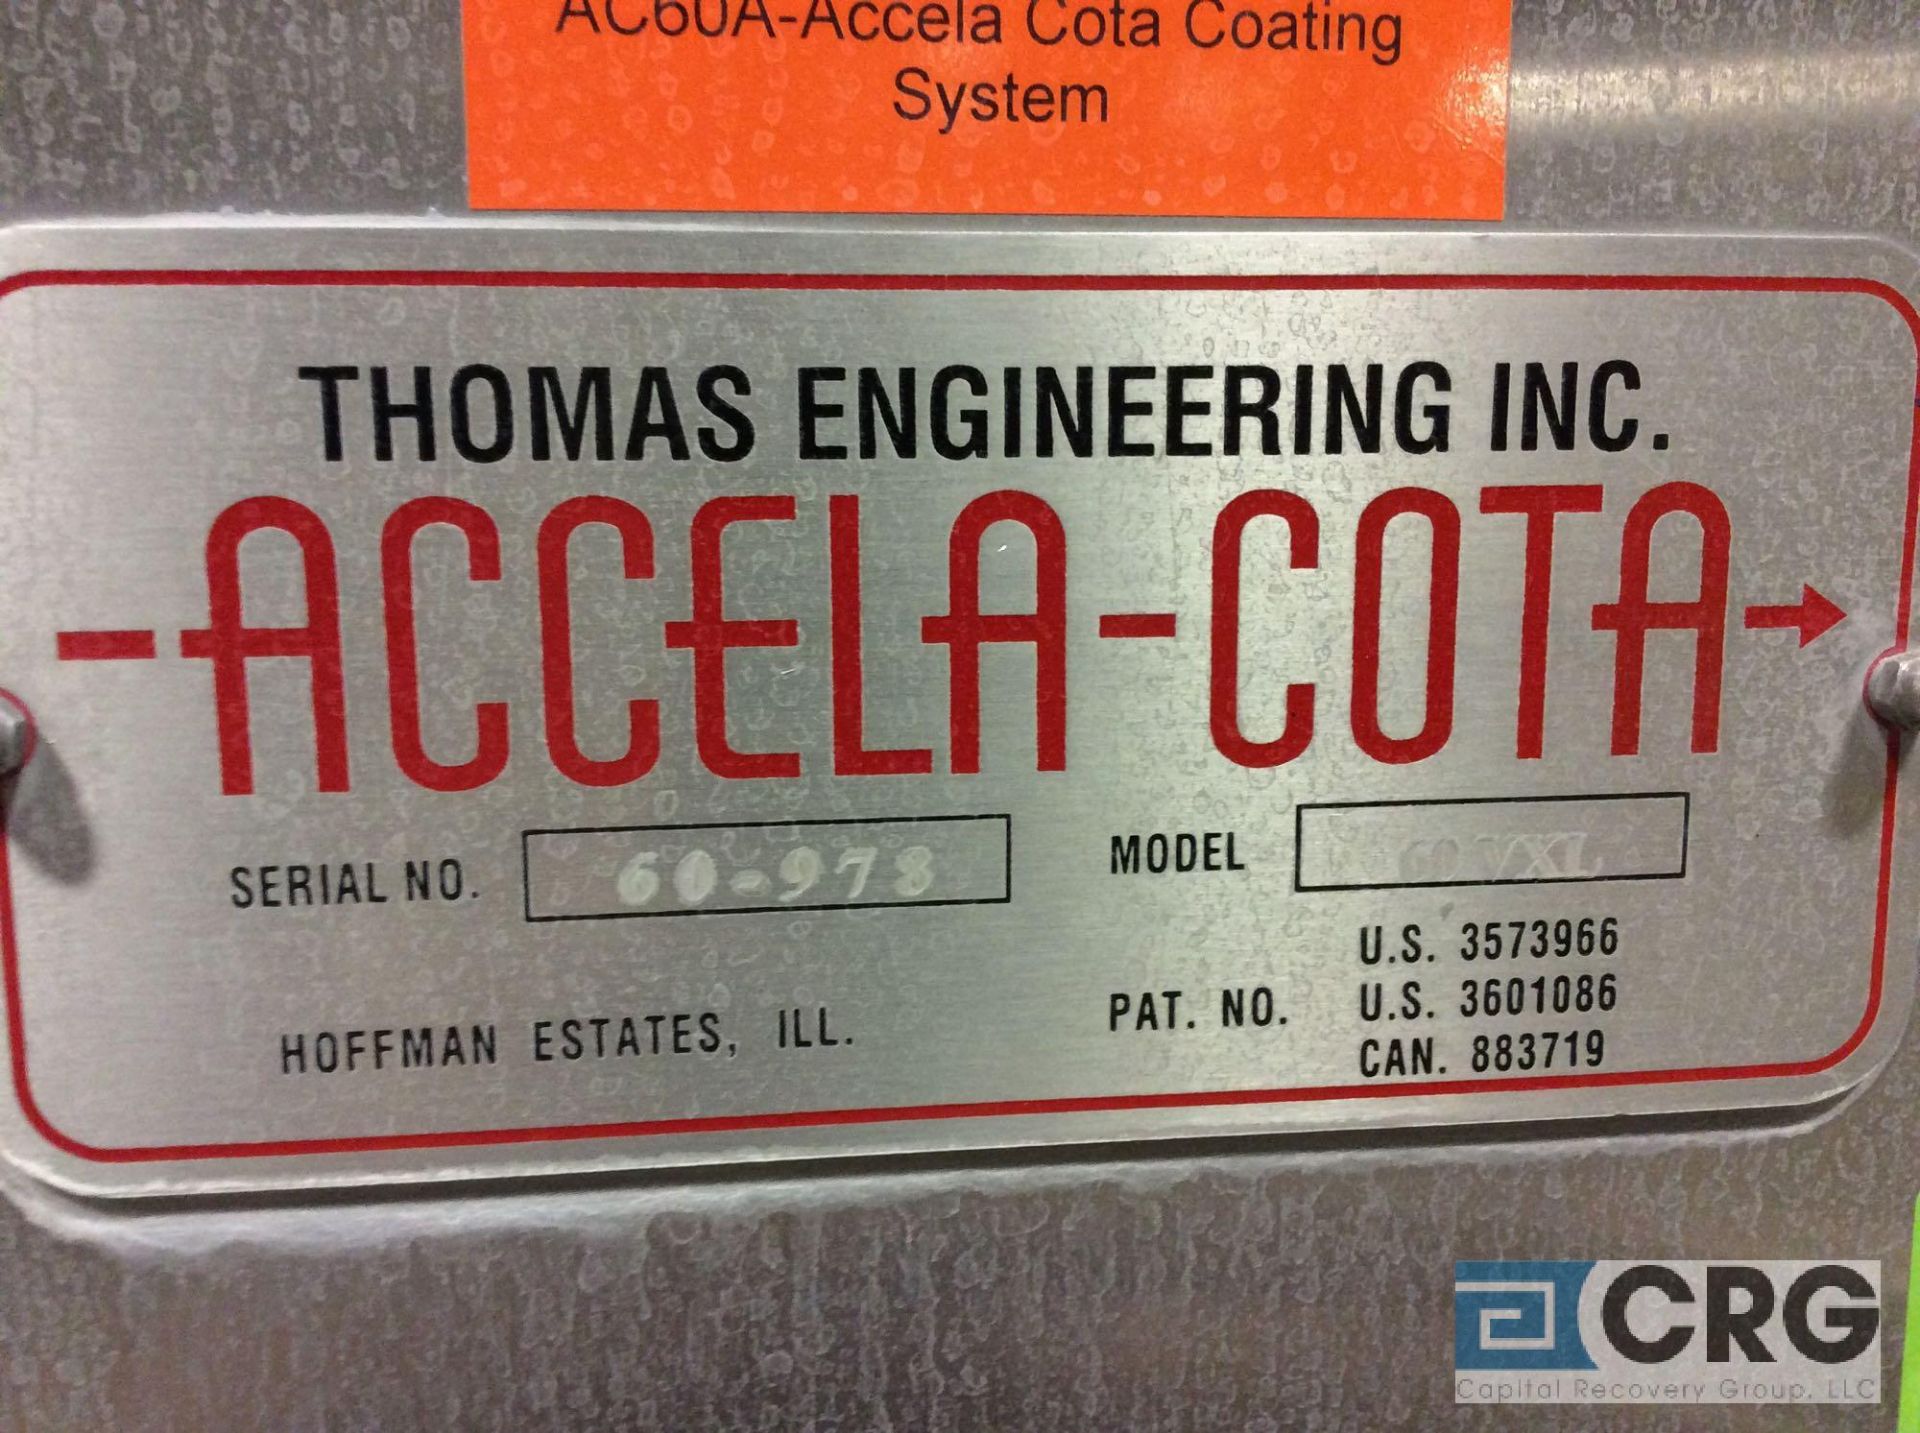 2000 Thomas Accela-Cota 60VXL coating machine, sn 978, 3-phase, with portable spray cart sn 596, - Image 6 of 19